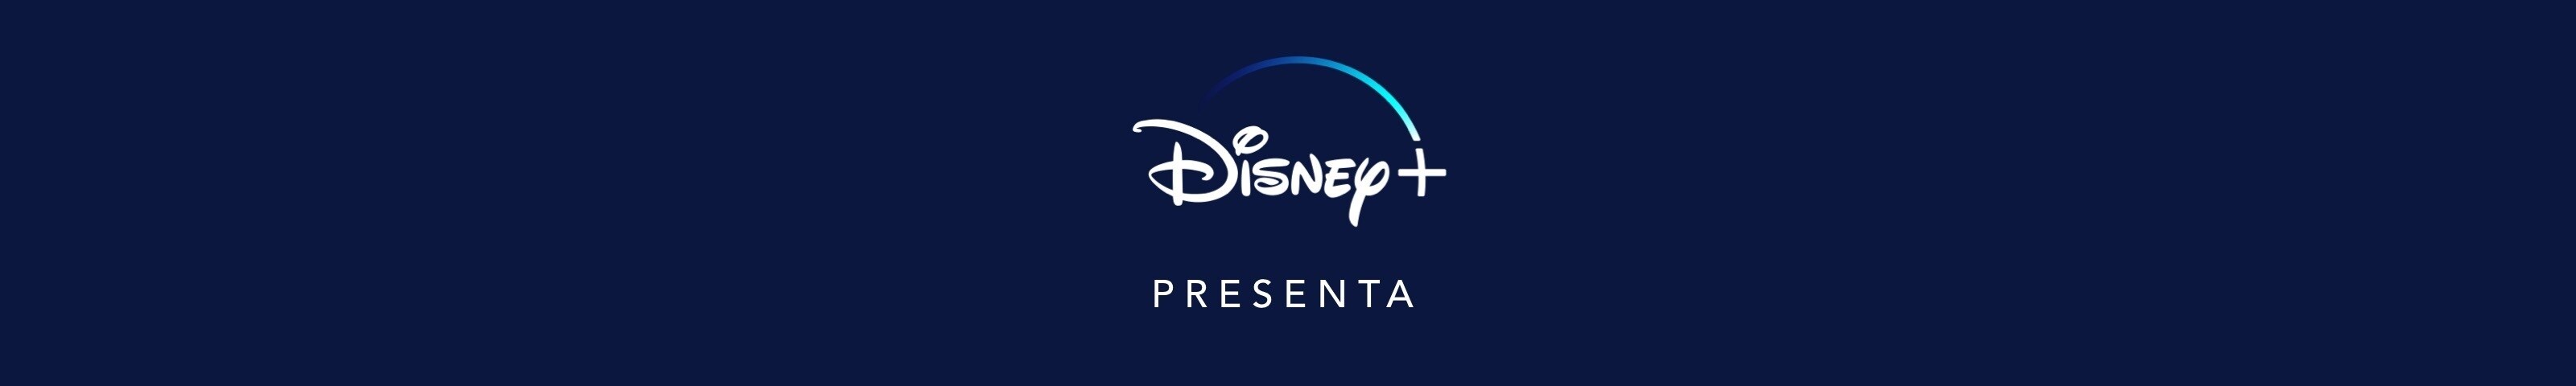 Disney+ presenta